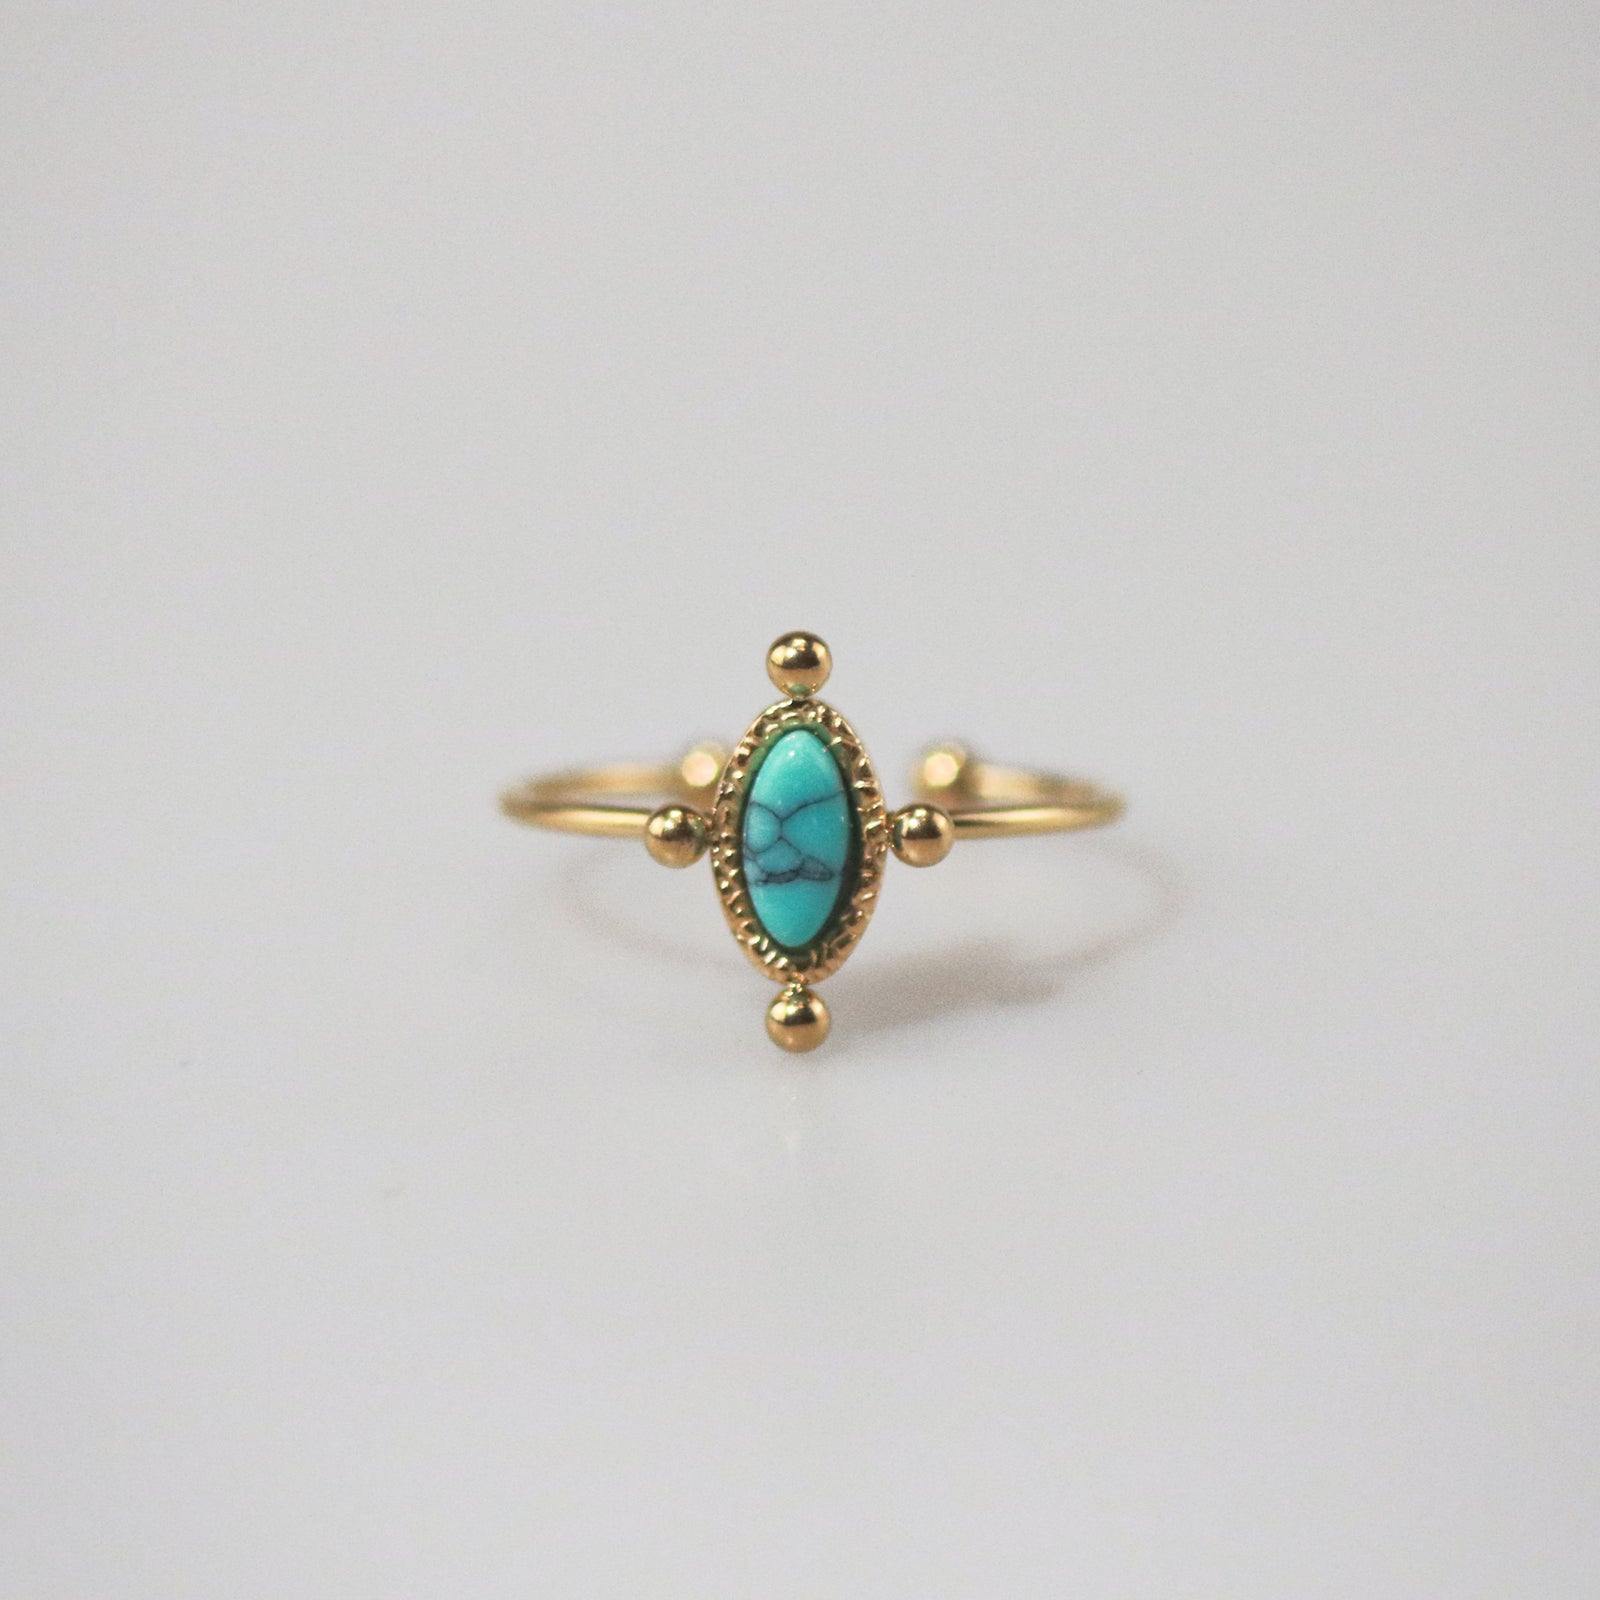 Meideya Jewelry Gold Turquoise Gemstone Ring adjustable